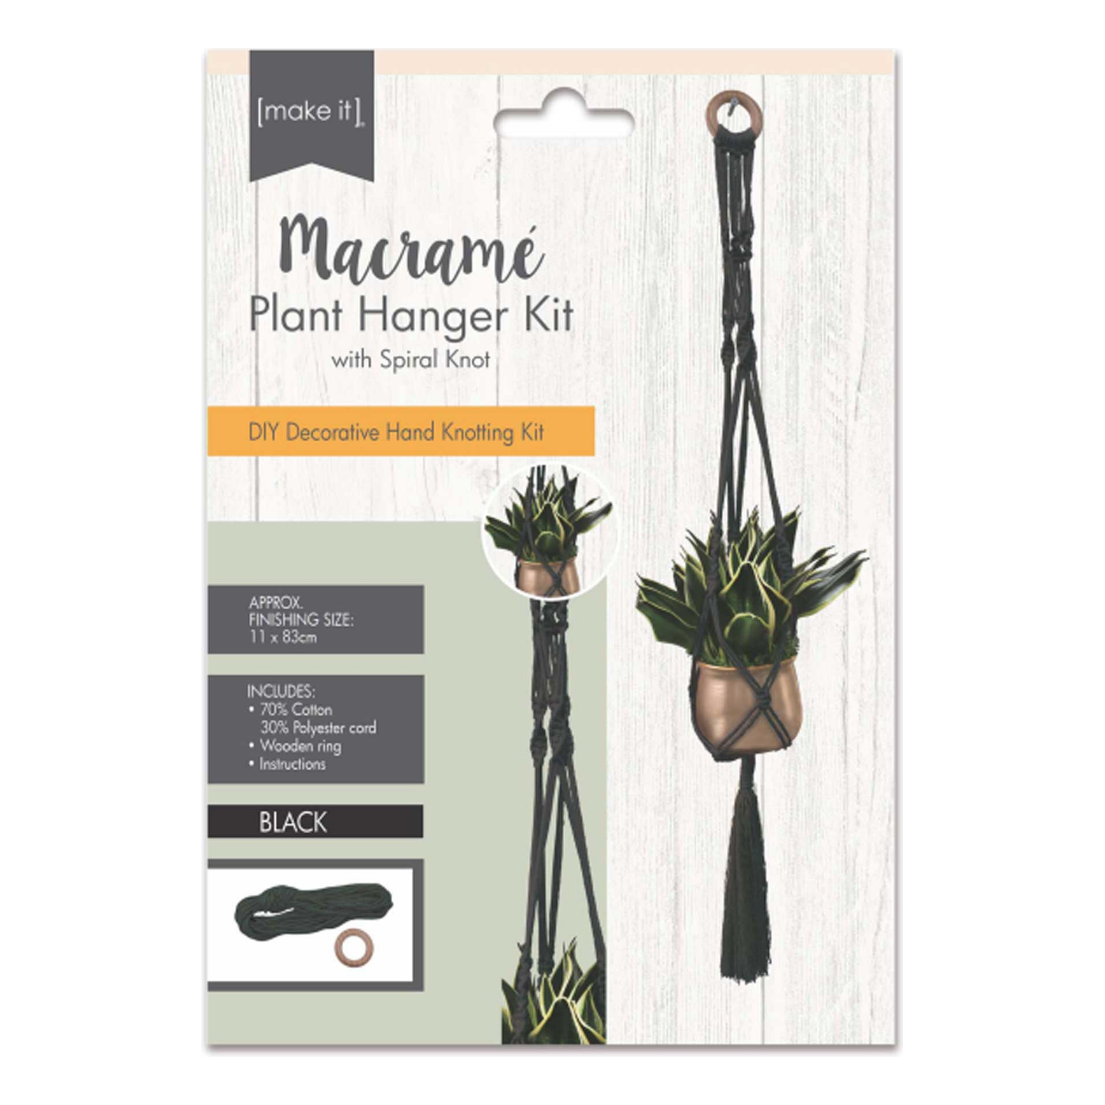 Macrame Plant Hanger Kit with Spiral Knot - Black - CRAFT2U